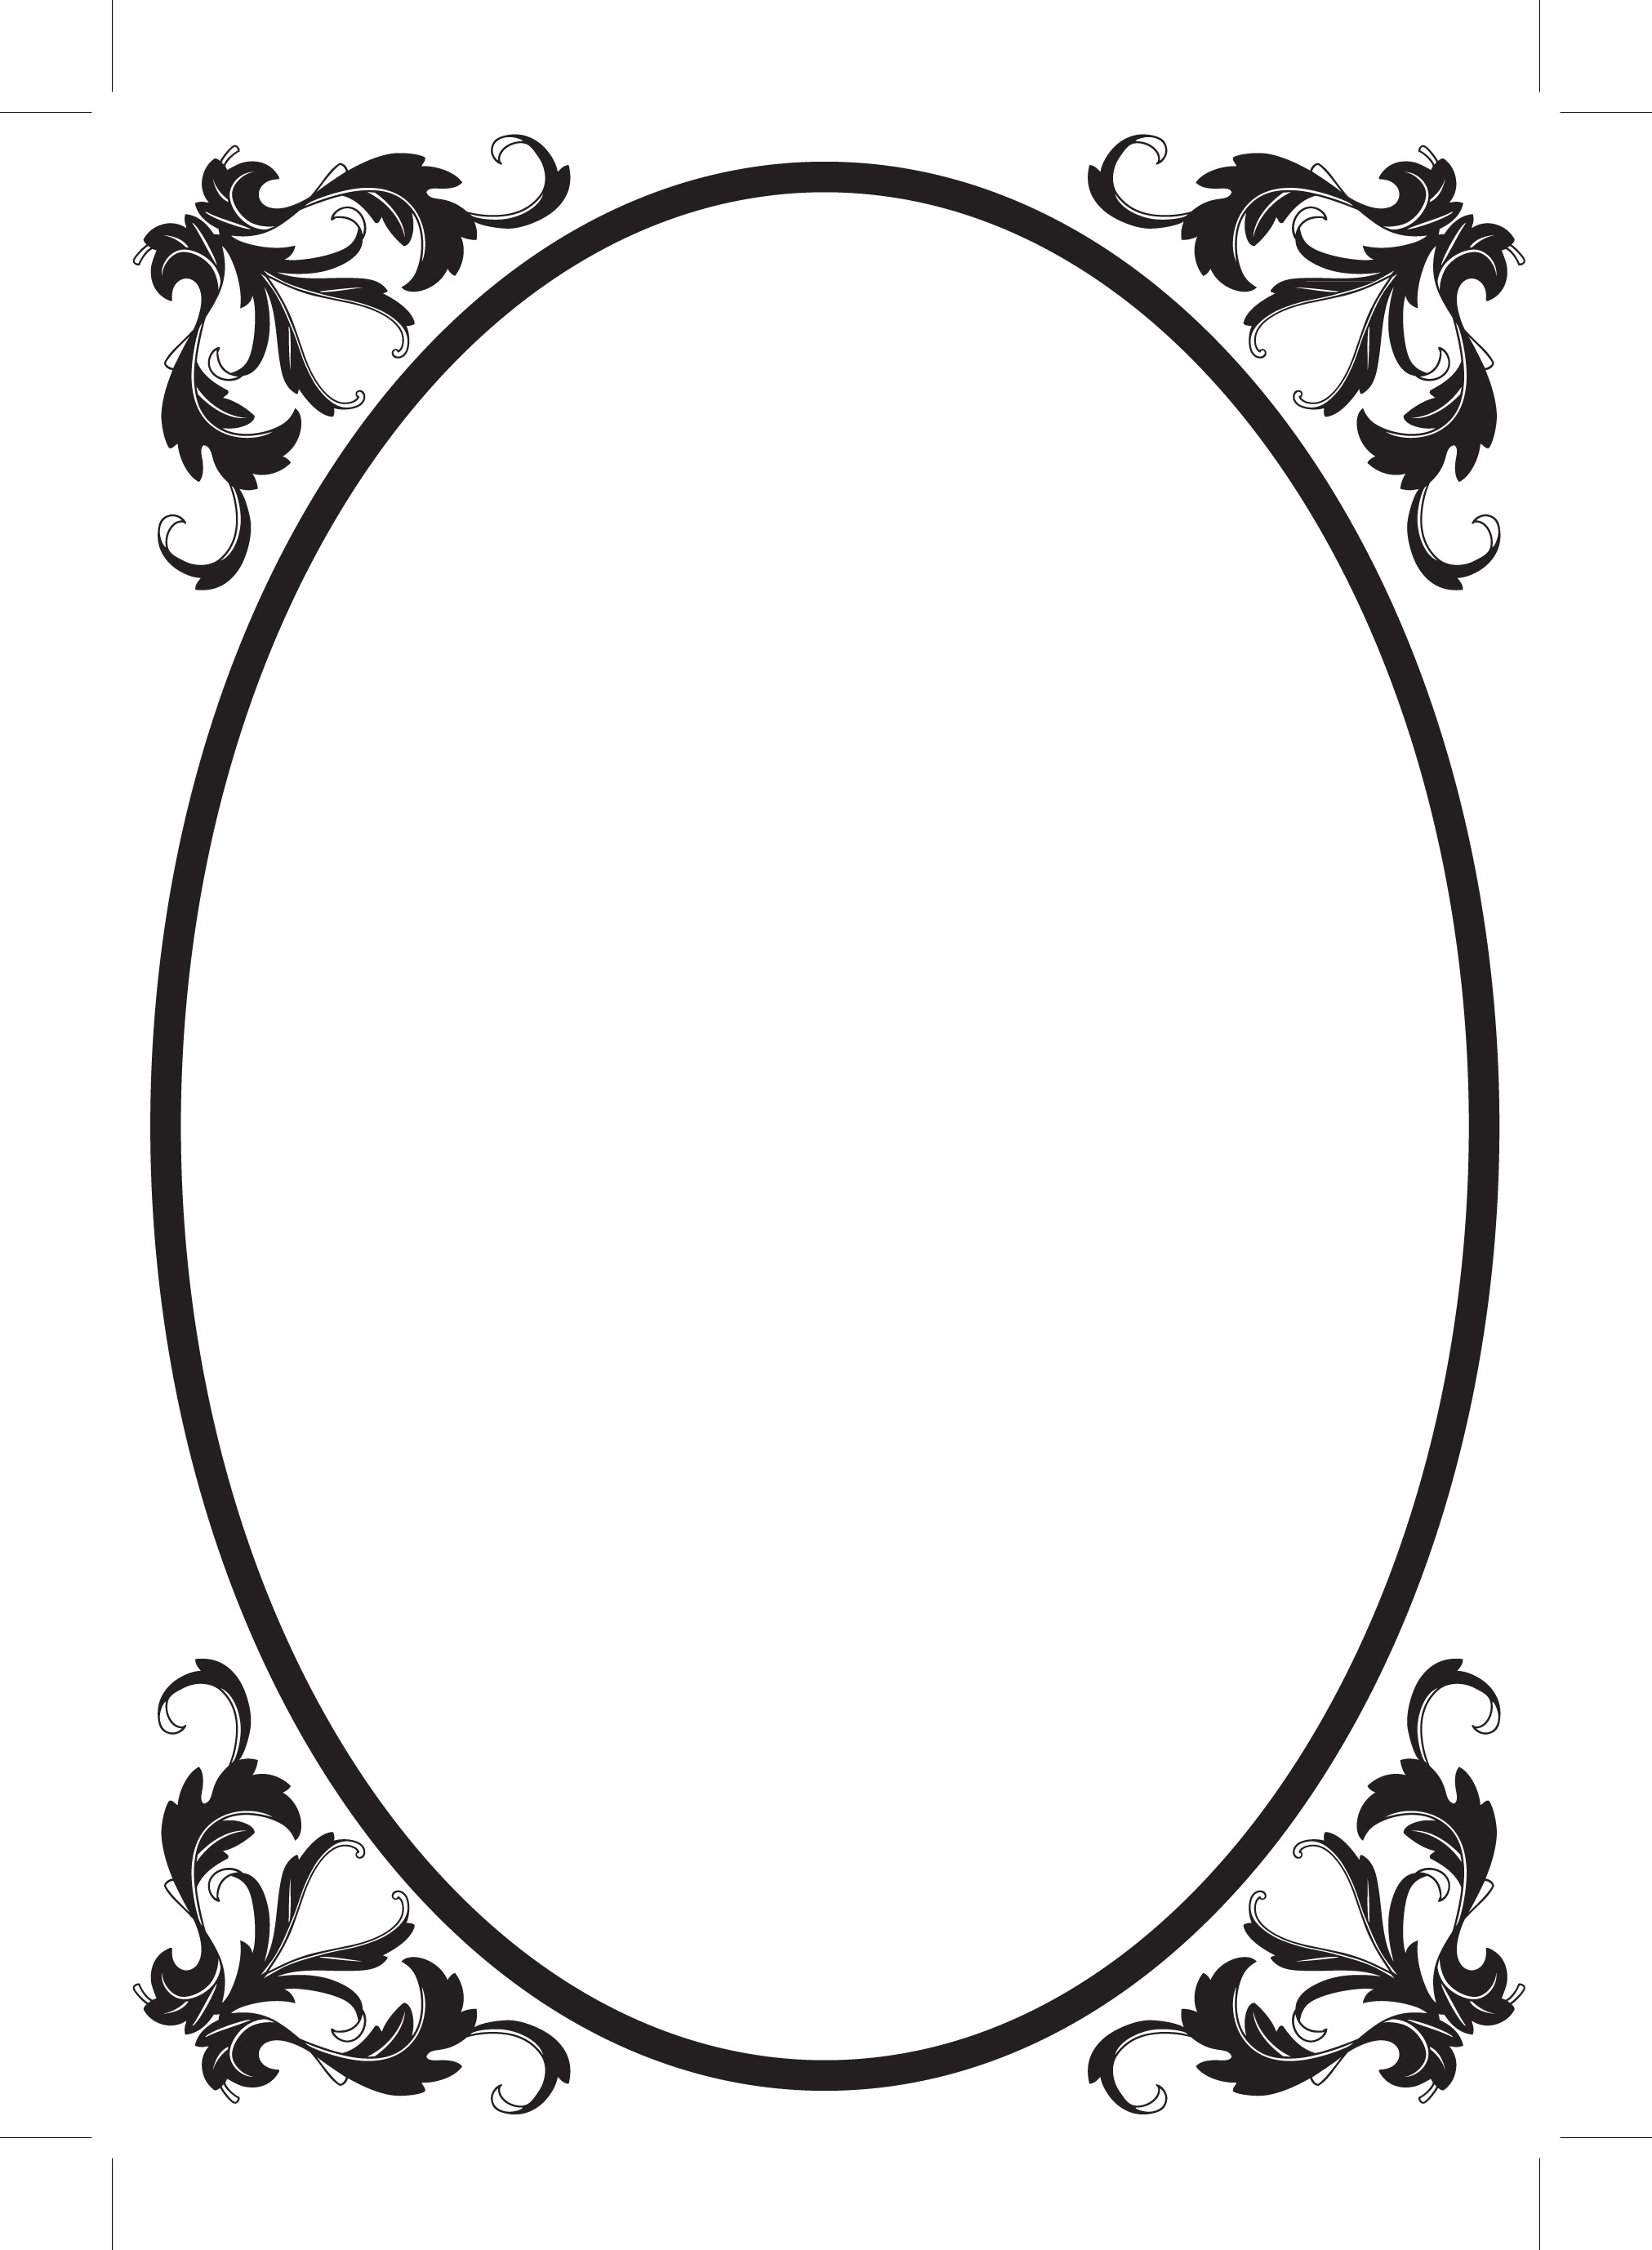 Oval clipart frame